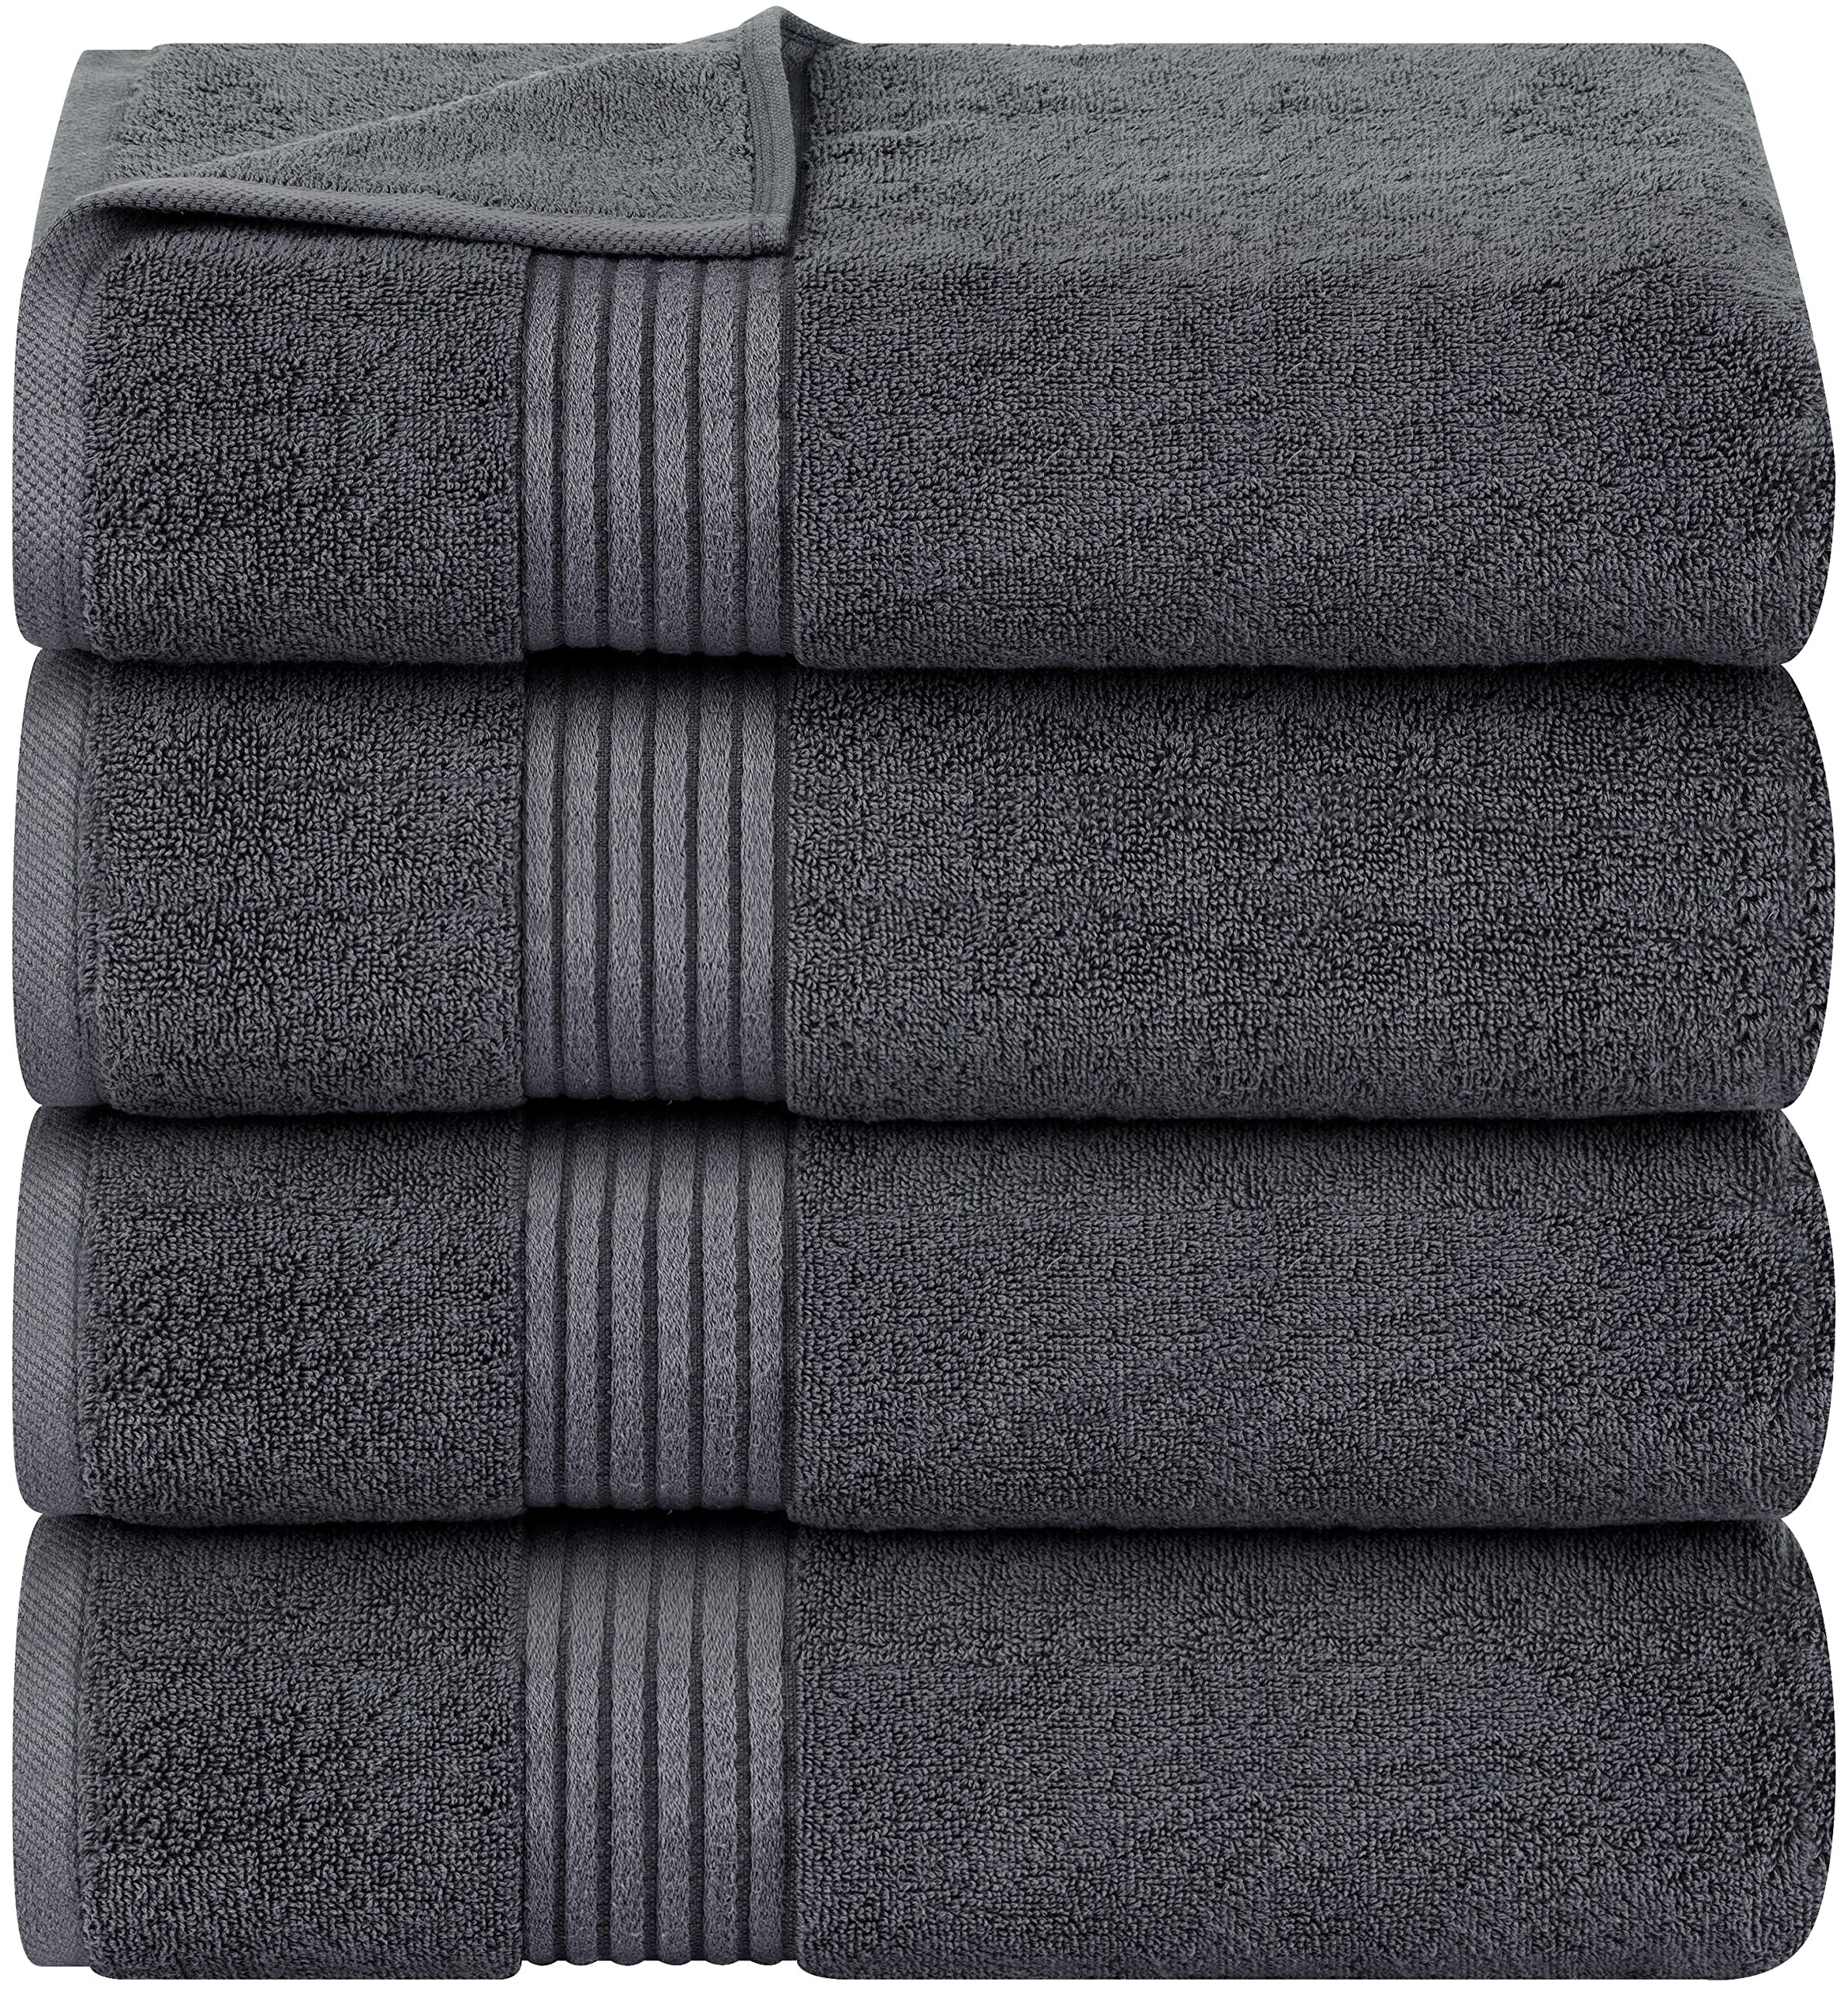 4 Piece Bath Towel Set 100% Turkish Cotton 27 In 54 In Bath Towels For  Bathroom